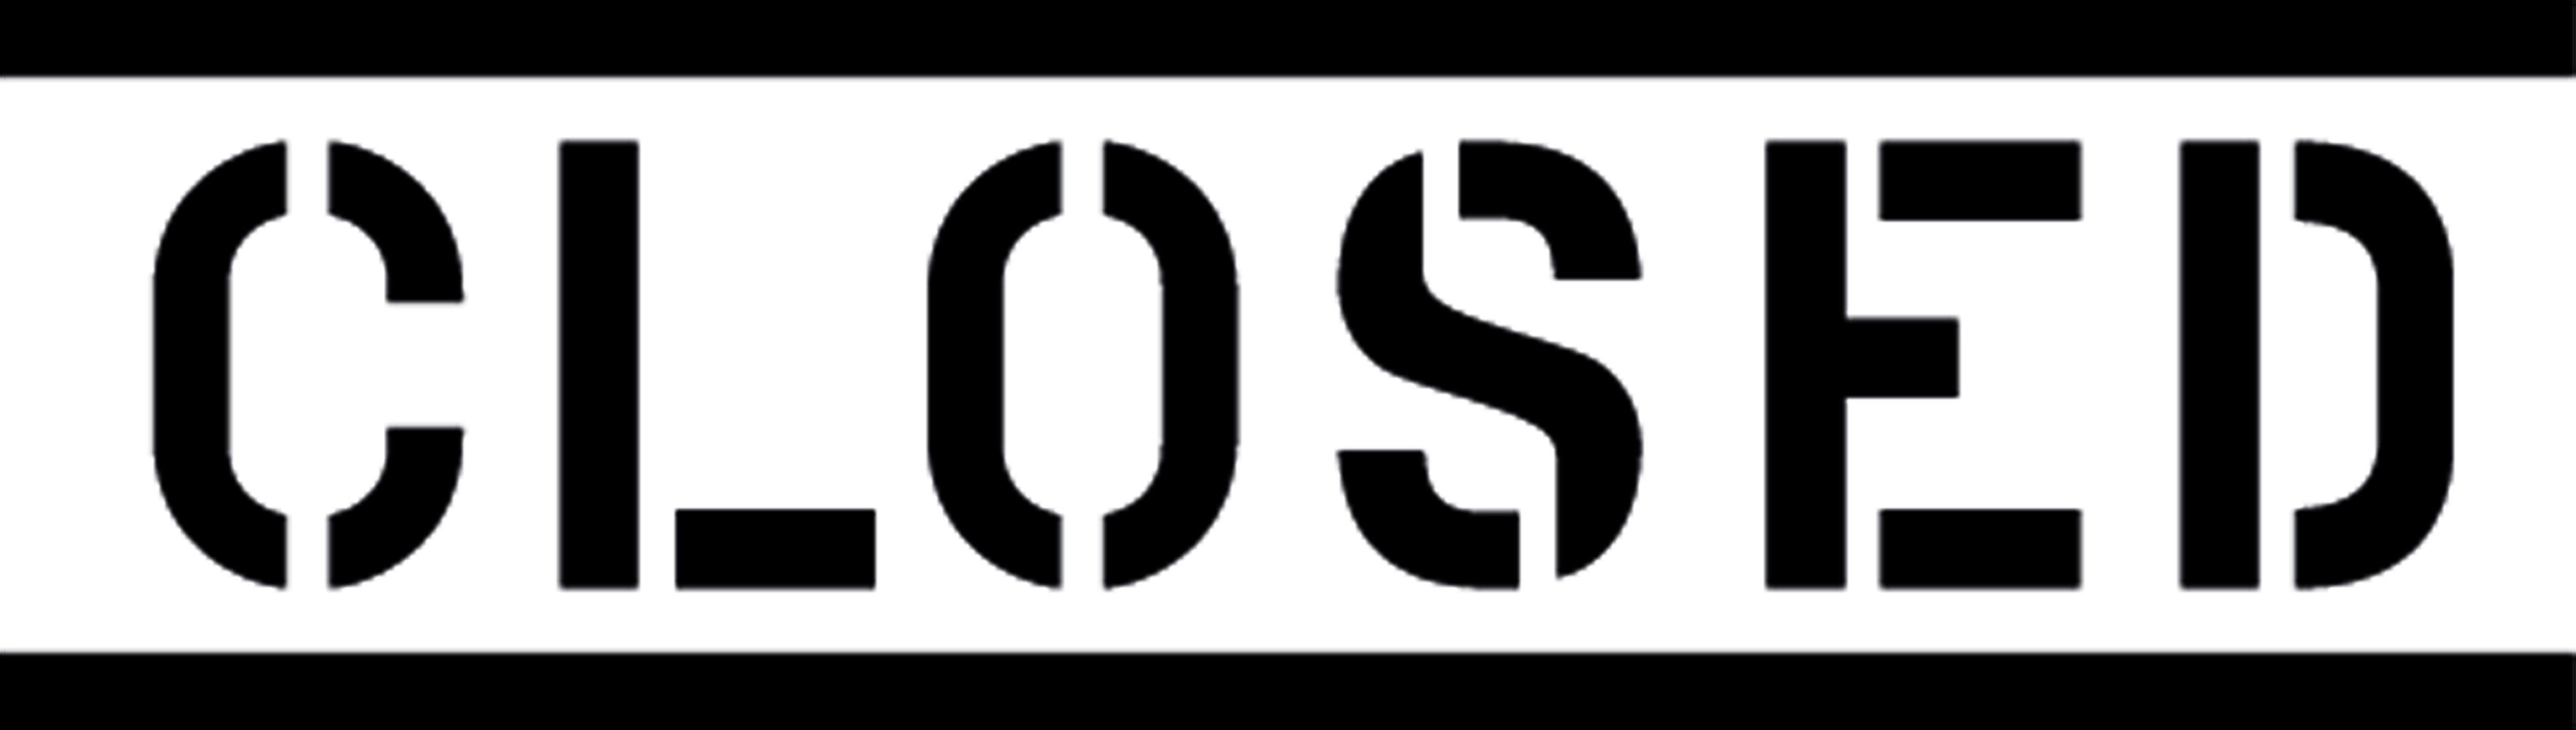 Closed Logo - File:CLOSED logo.jpg - Wikimedia Commons